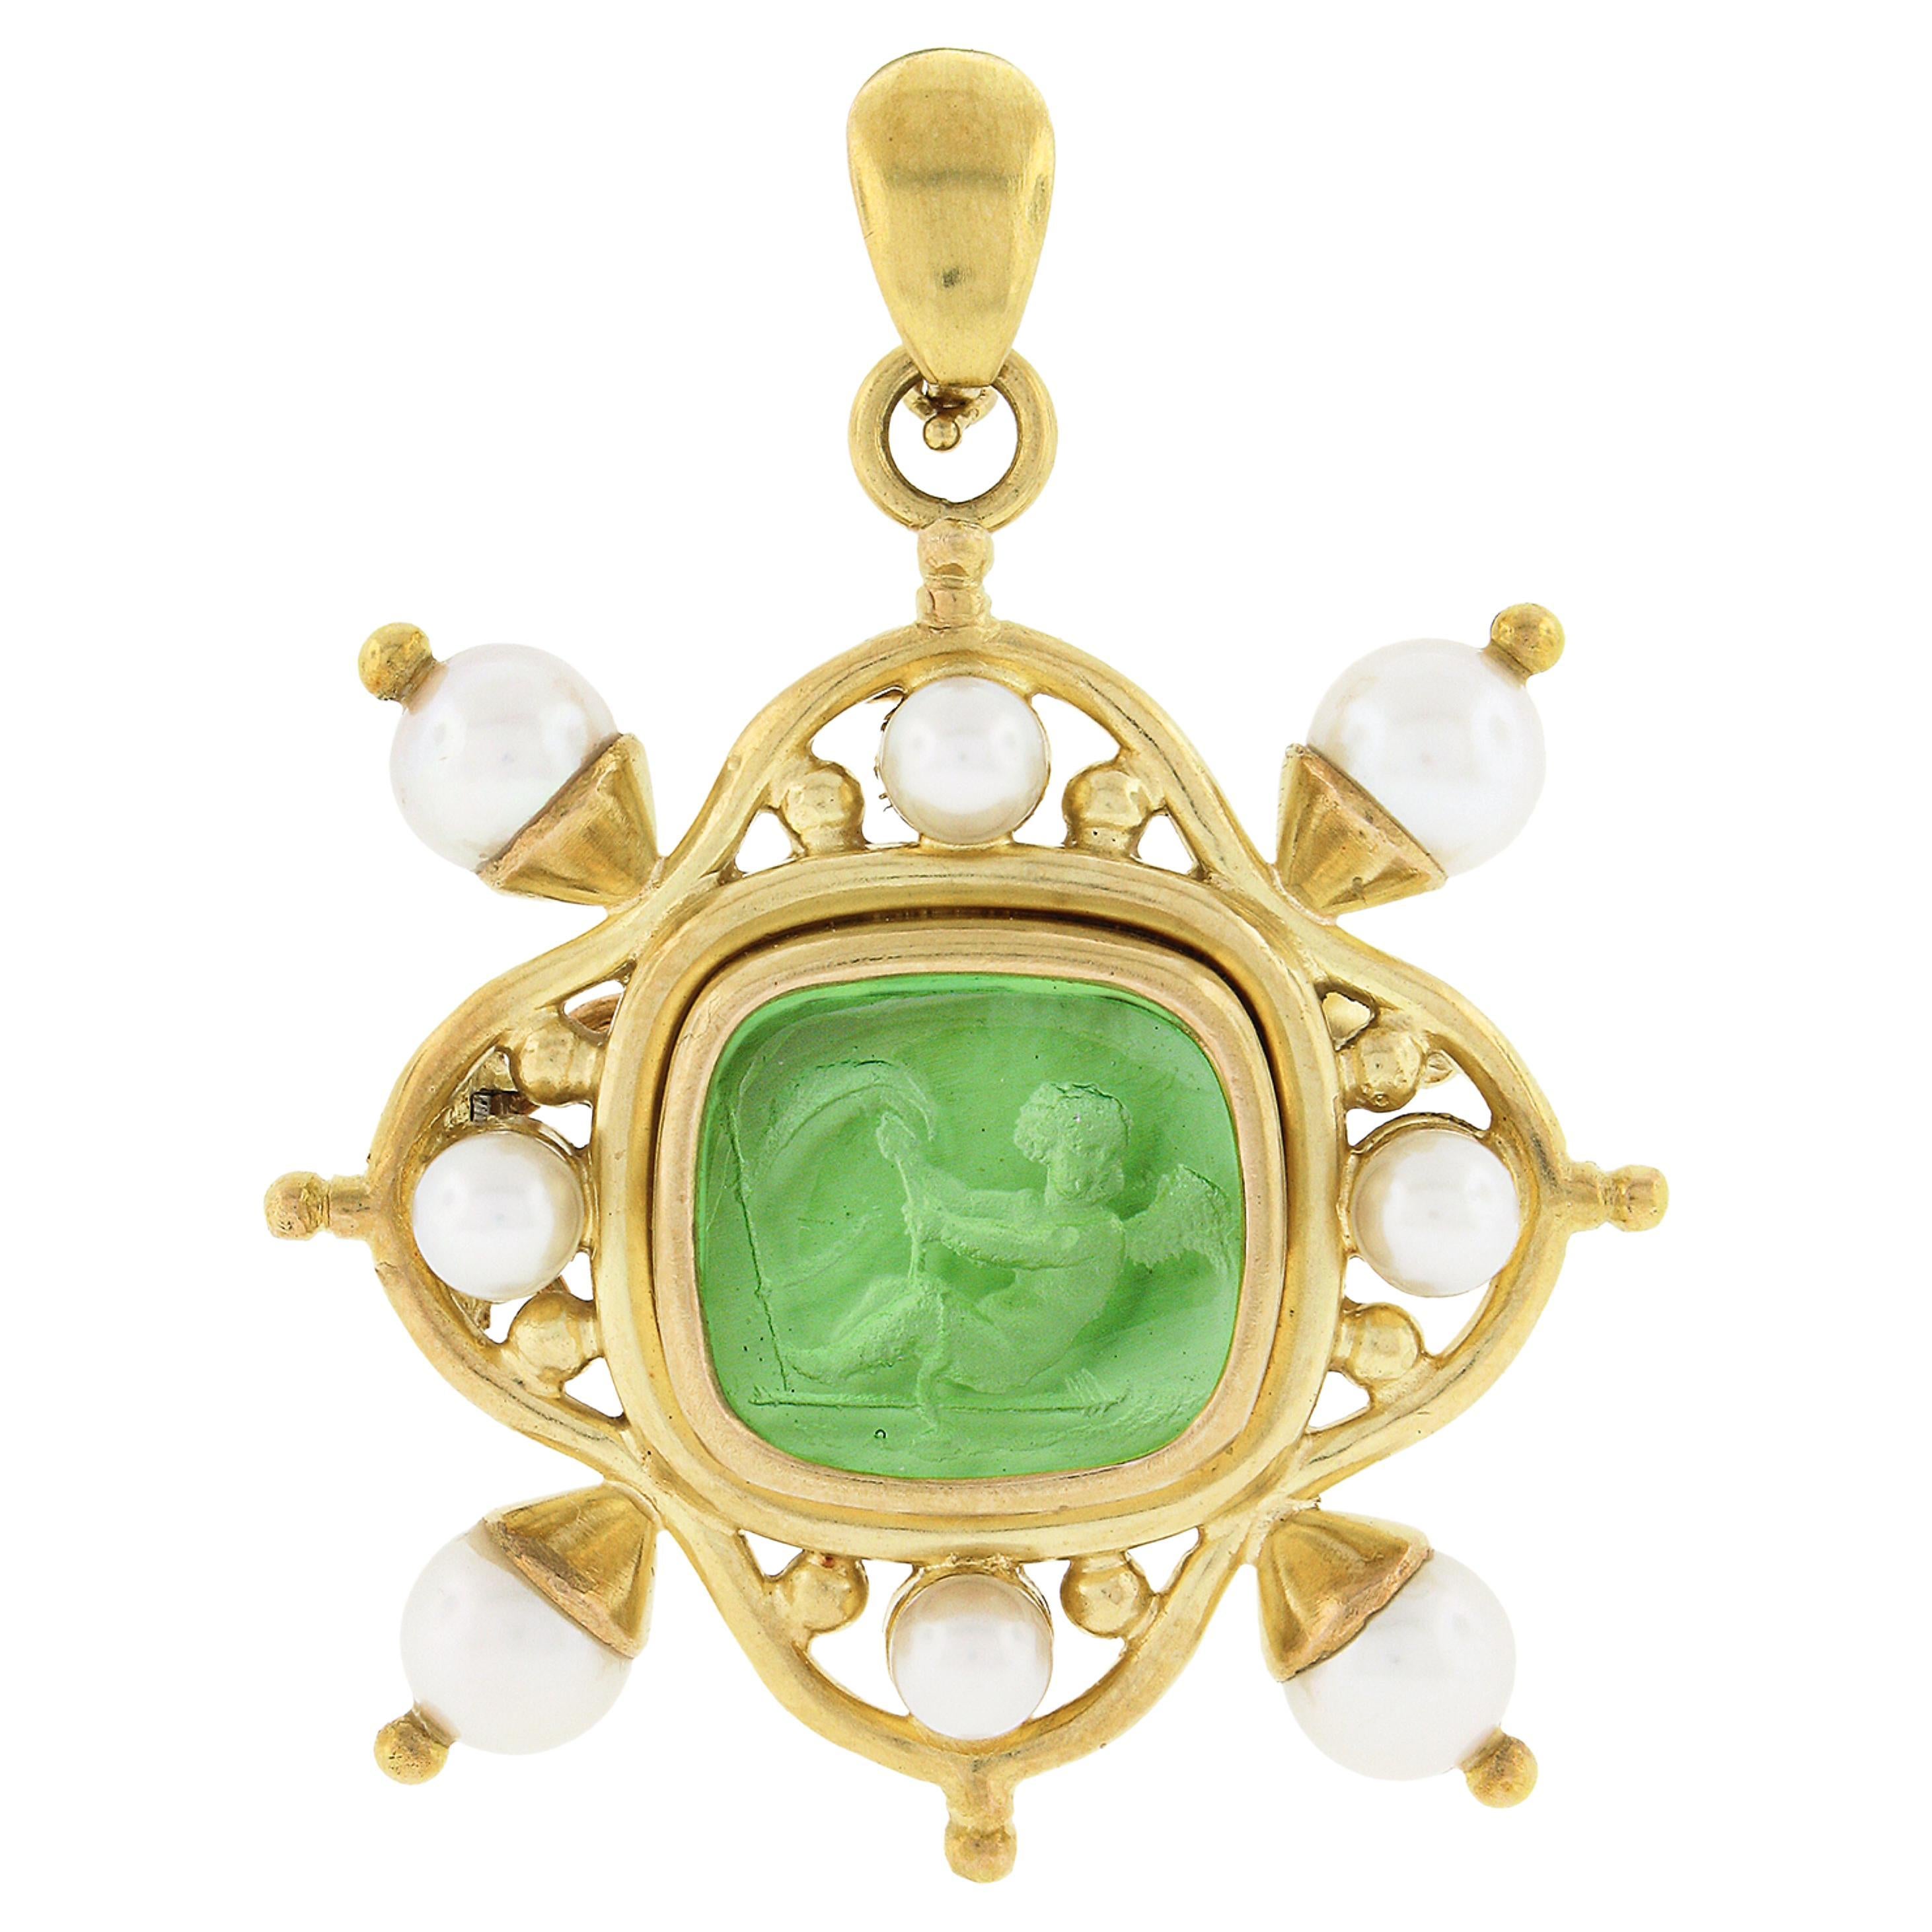 Elizabeth Locke Pendentif broche en or 18 carats avec intaille en verre vert sculpté et épingle en perles